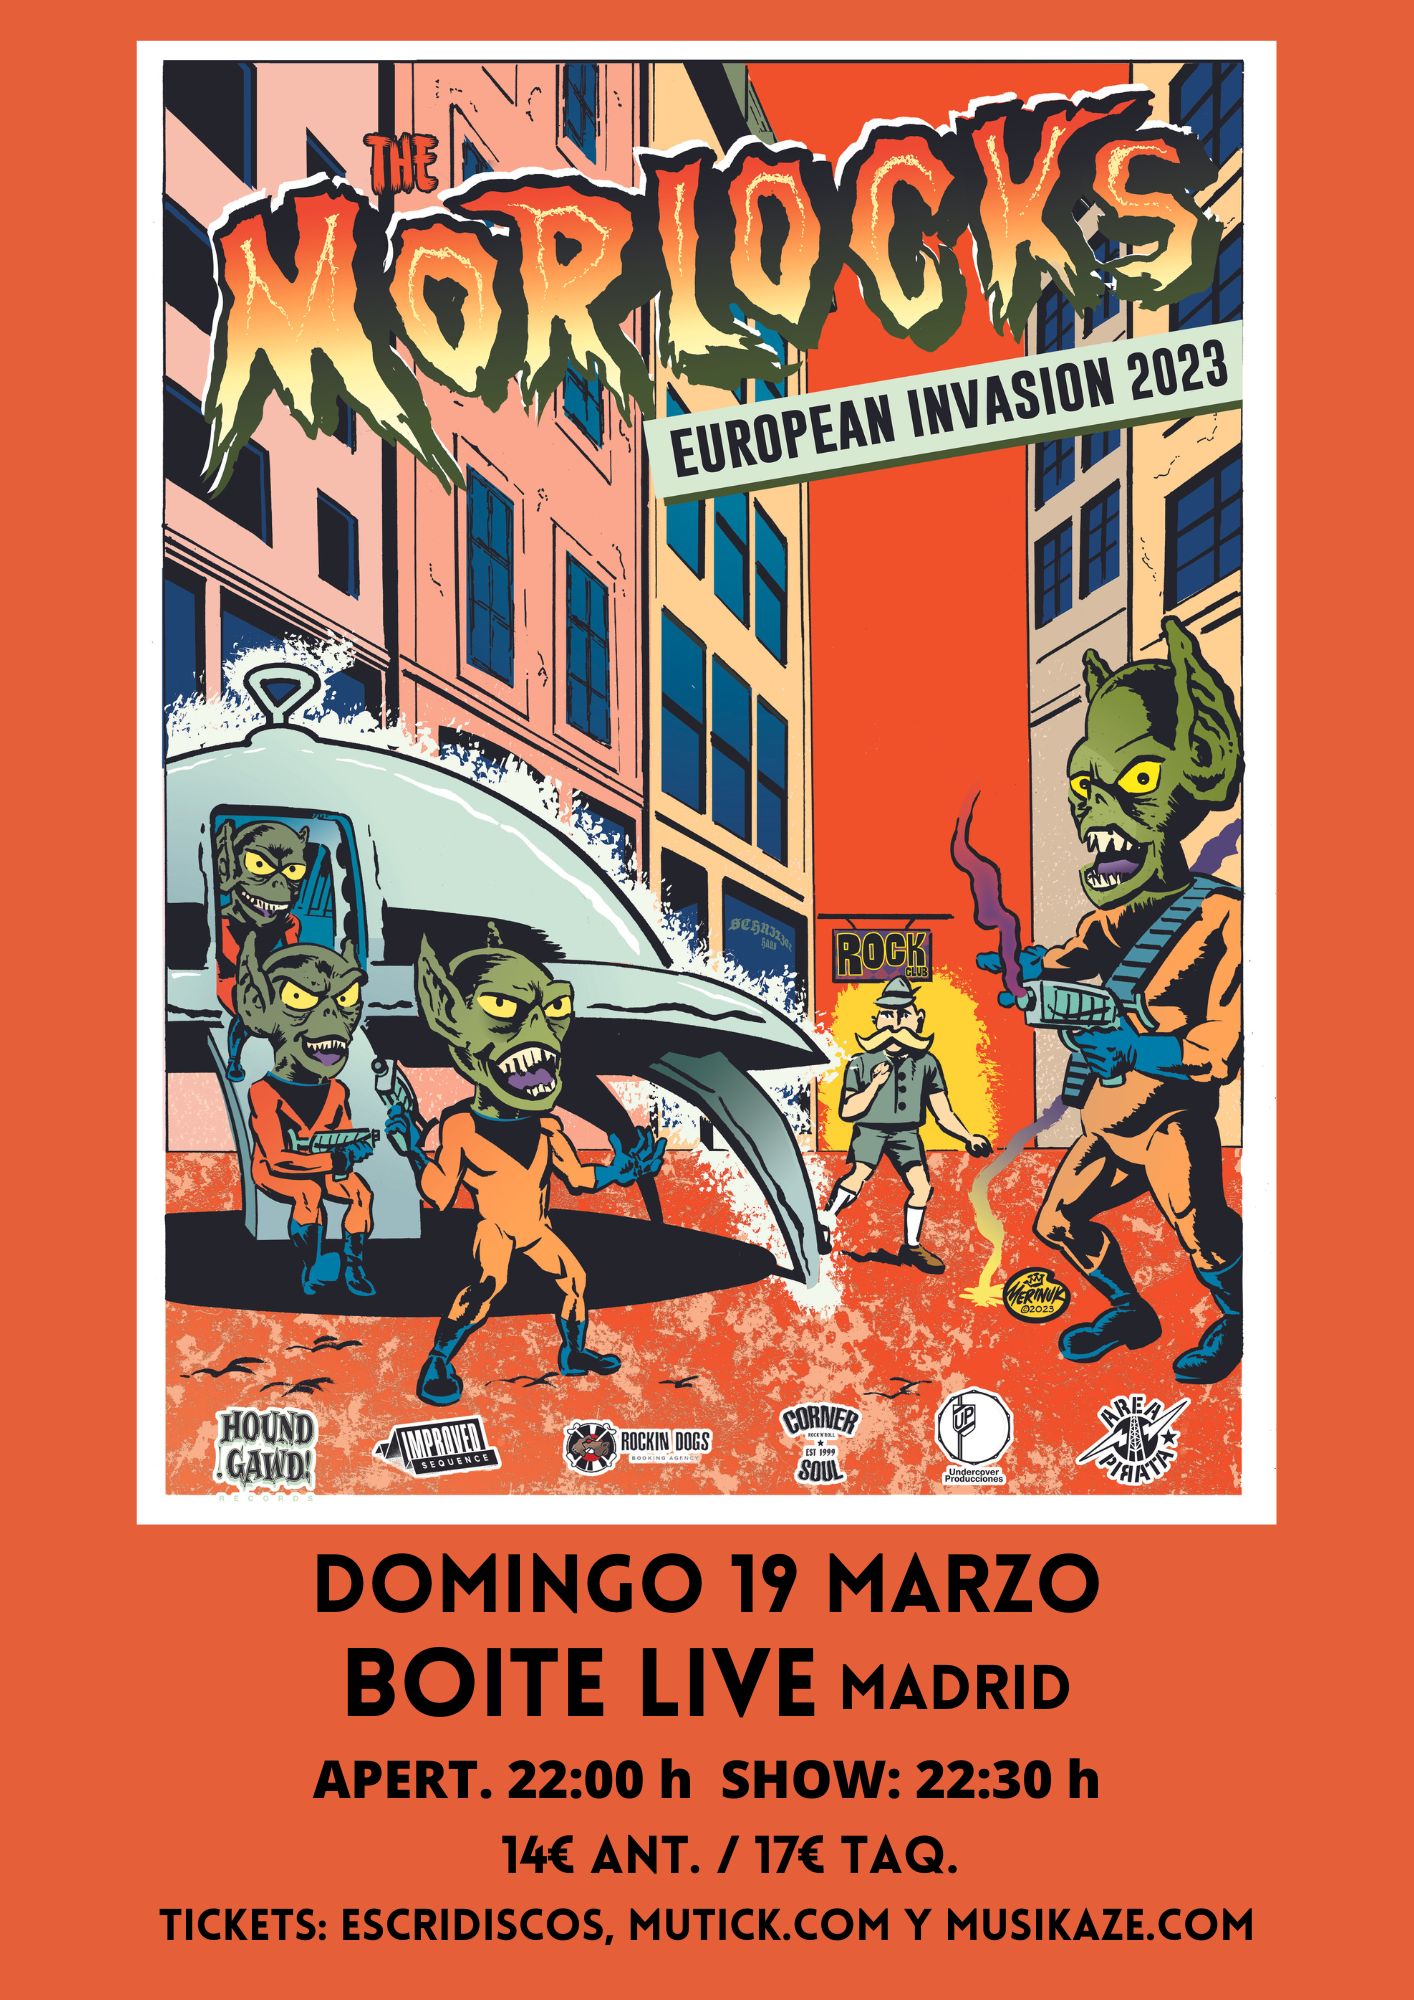 THE MORLOCKS (USA) en Madrid  - Mutick